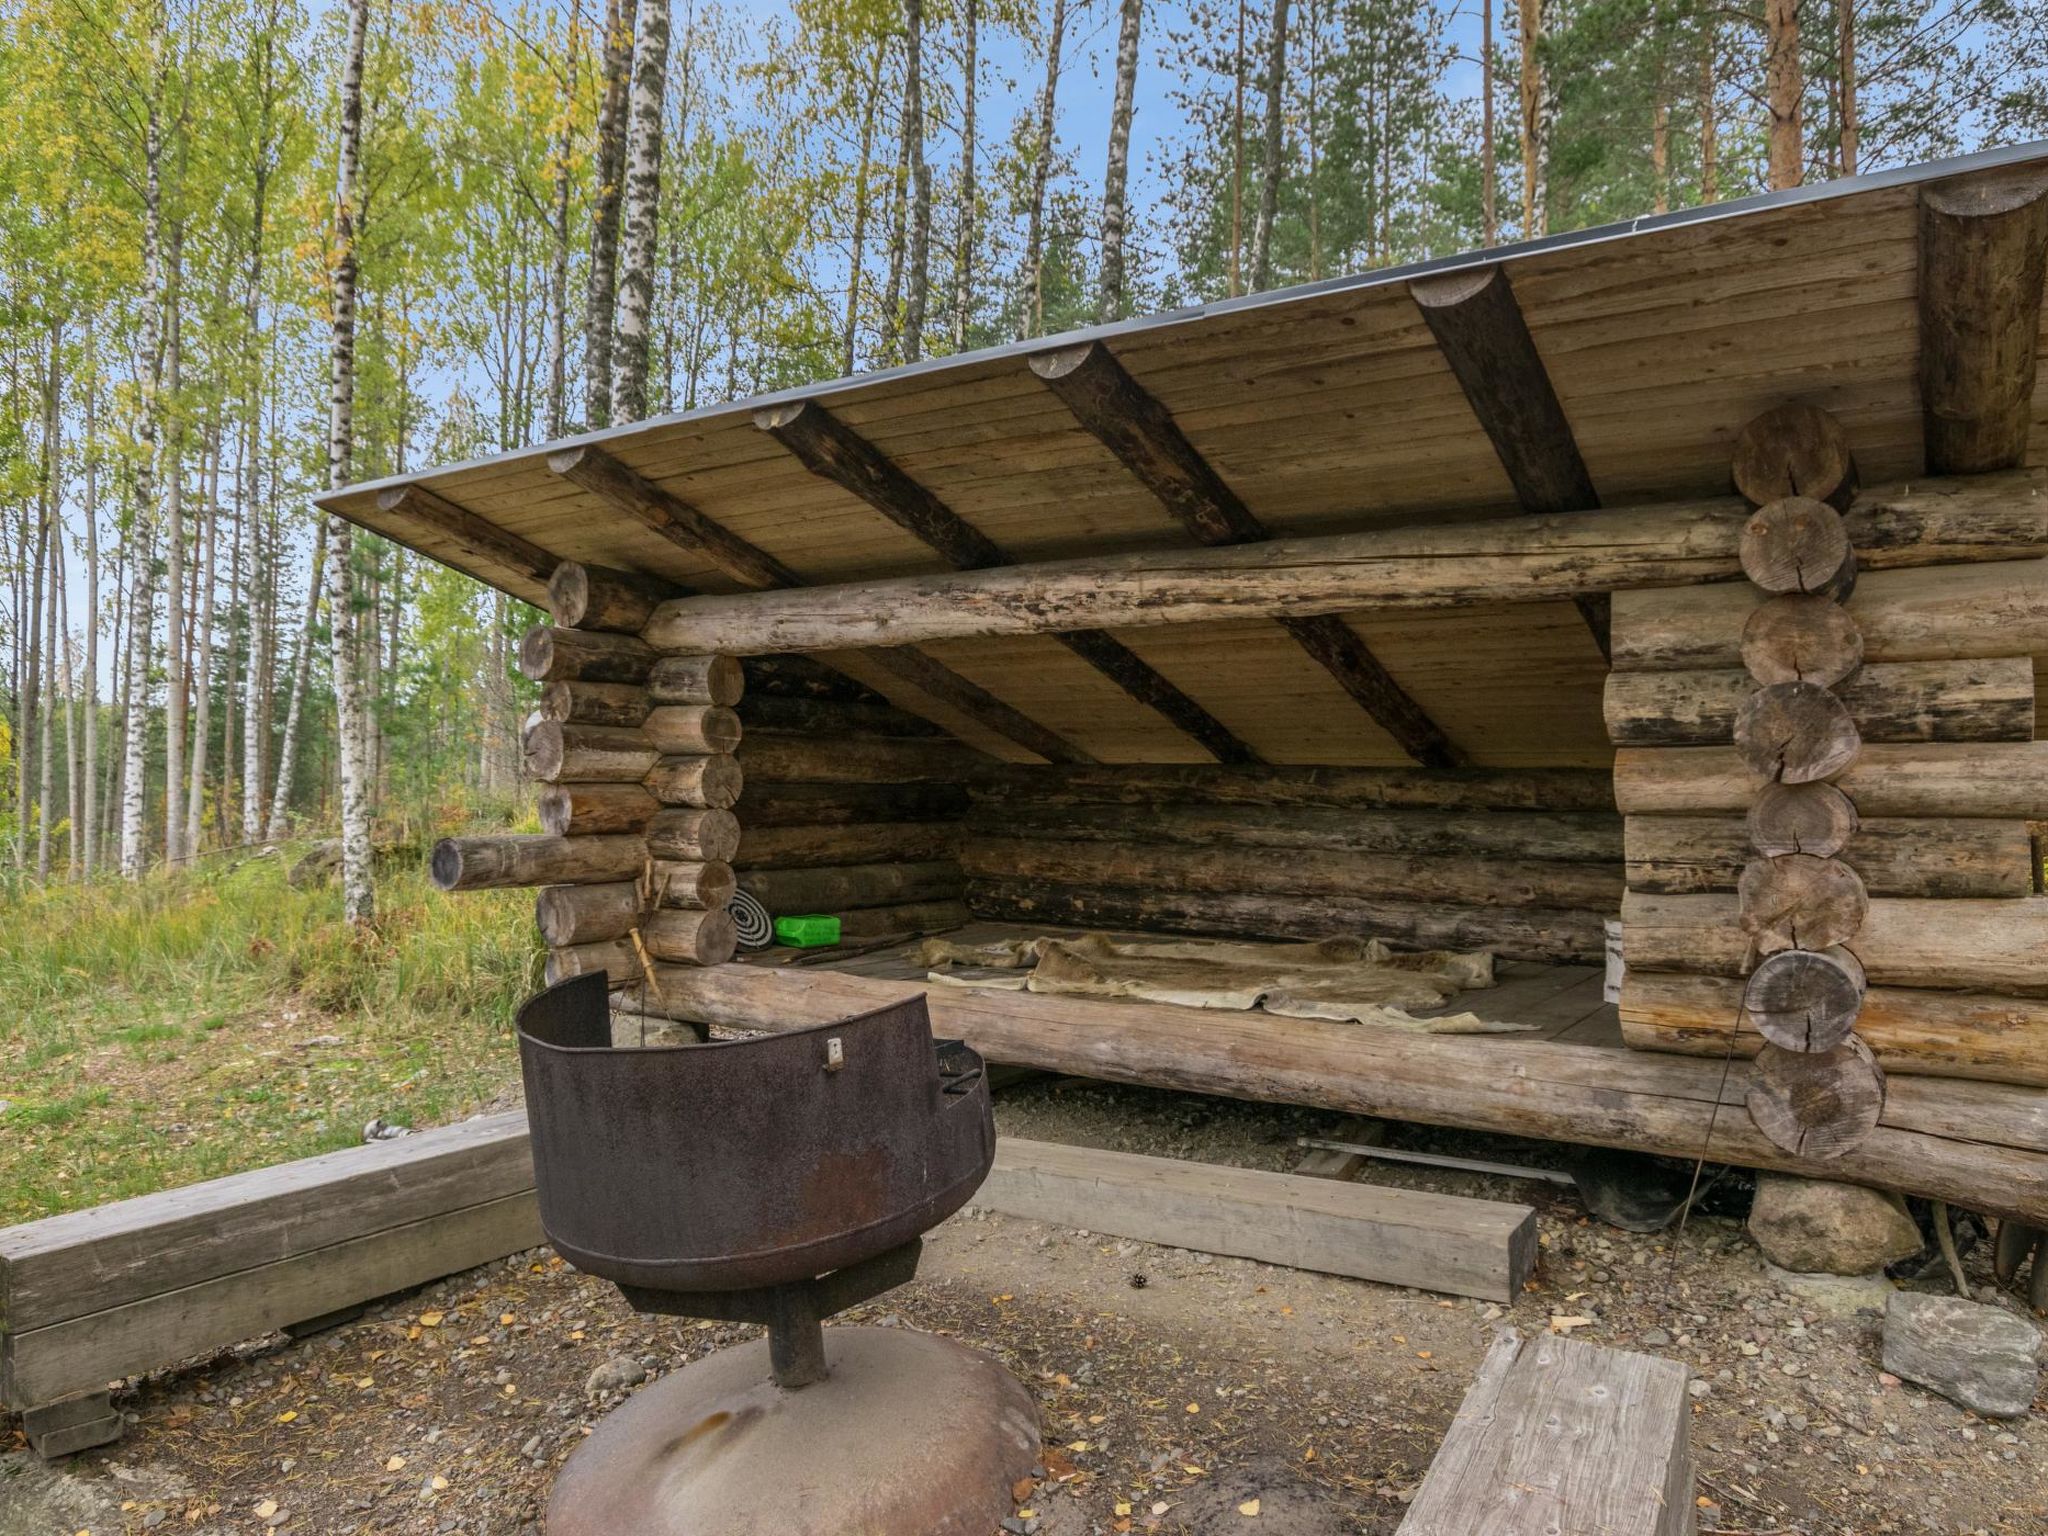 Photo 4 - 2 bedroom House in Mikkeli with sauna